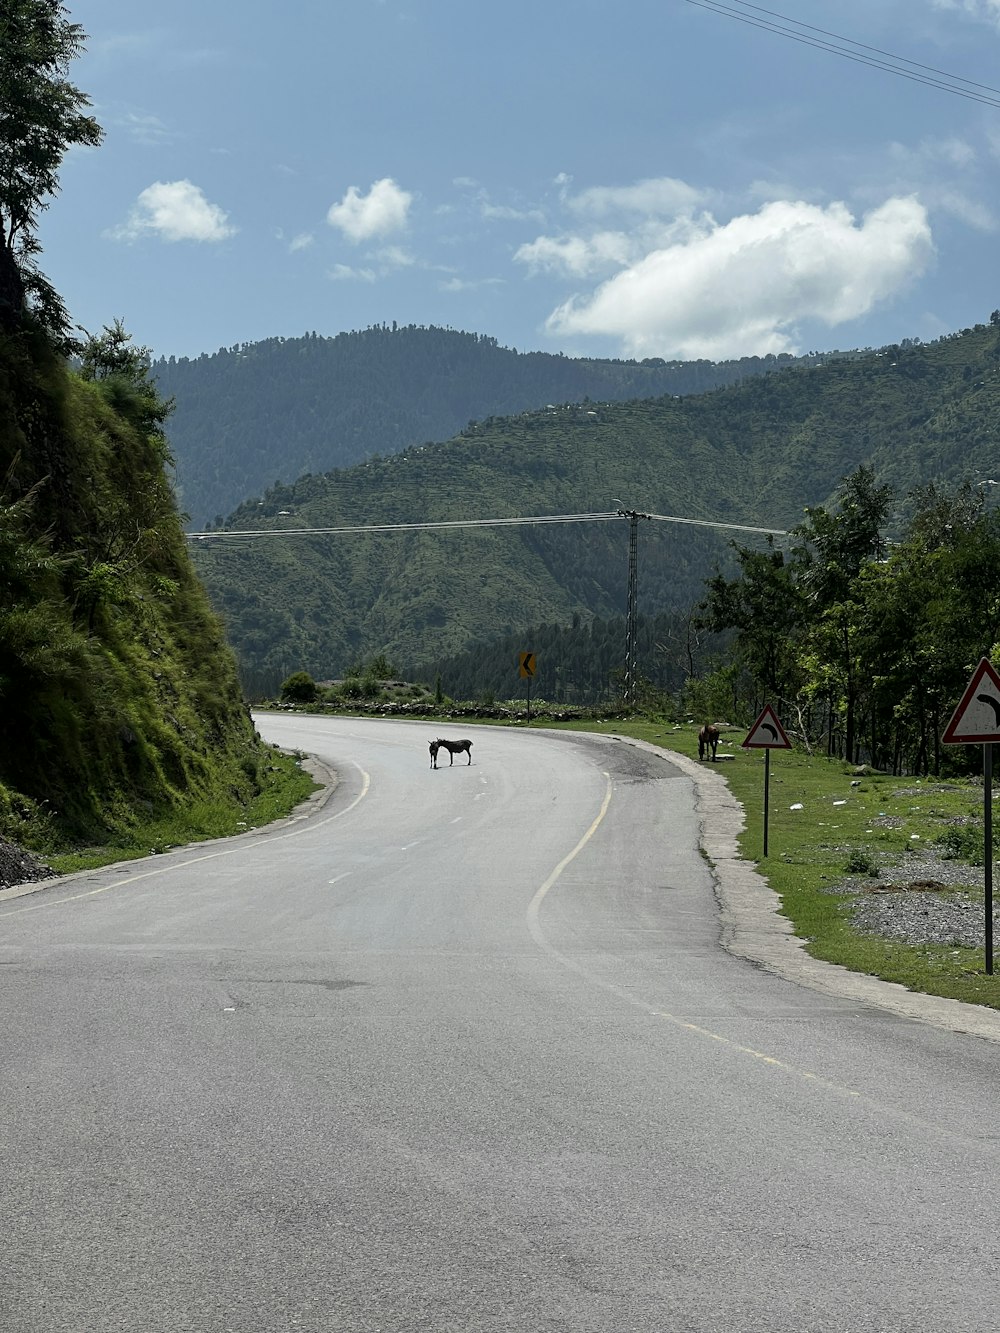 Un perro paseando por una carretera